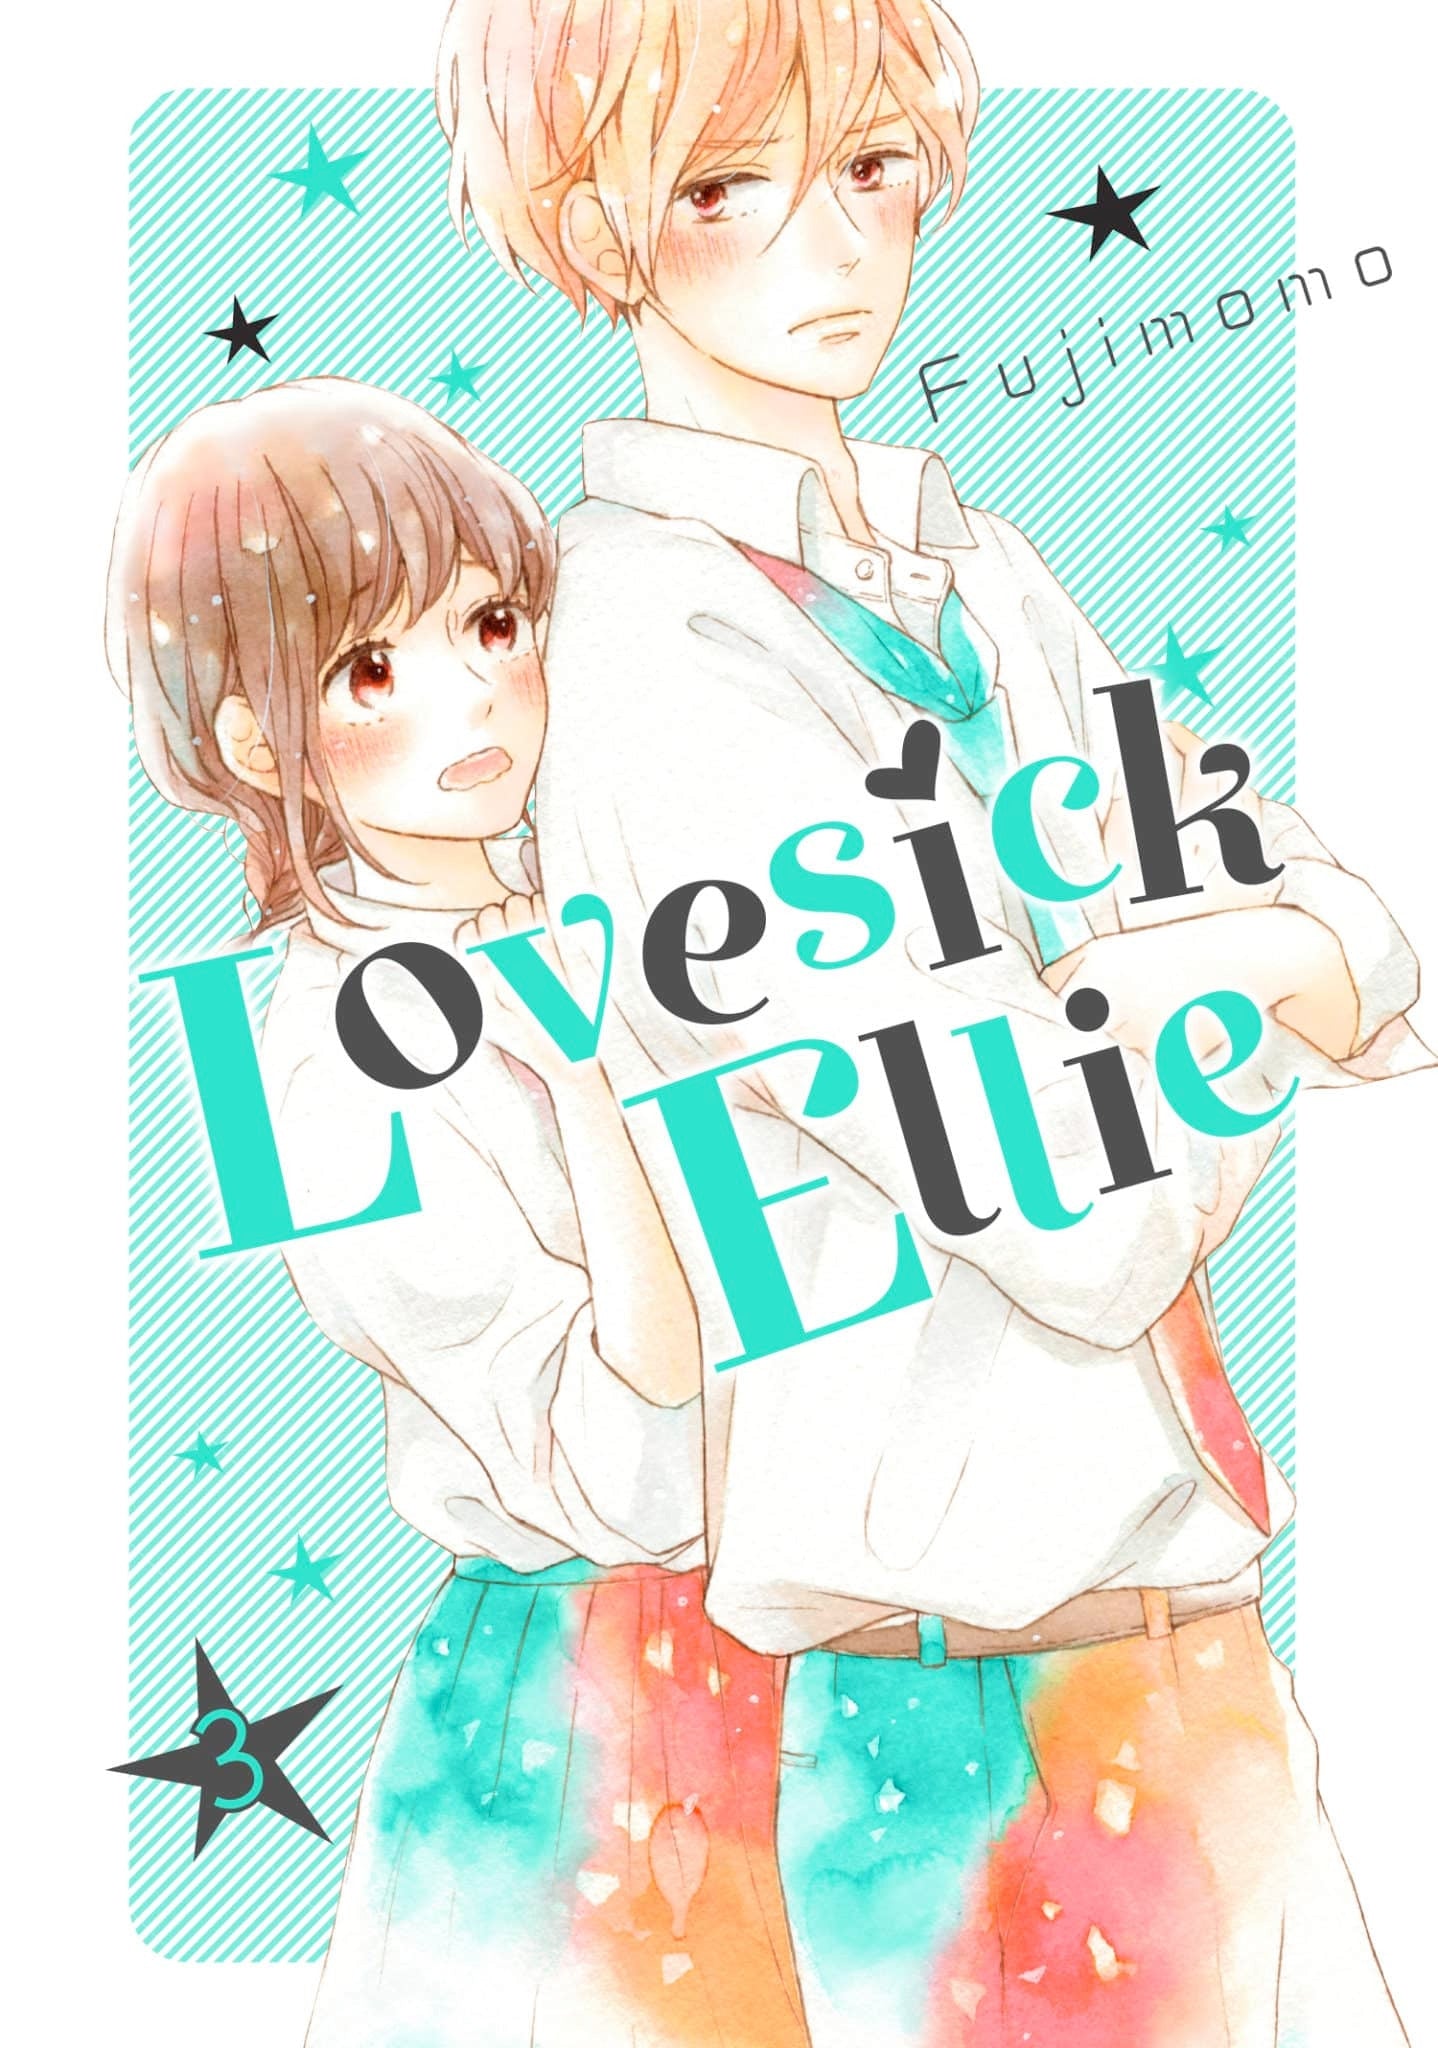 Lovesick Ellie Vol. 3